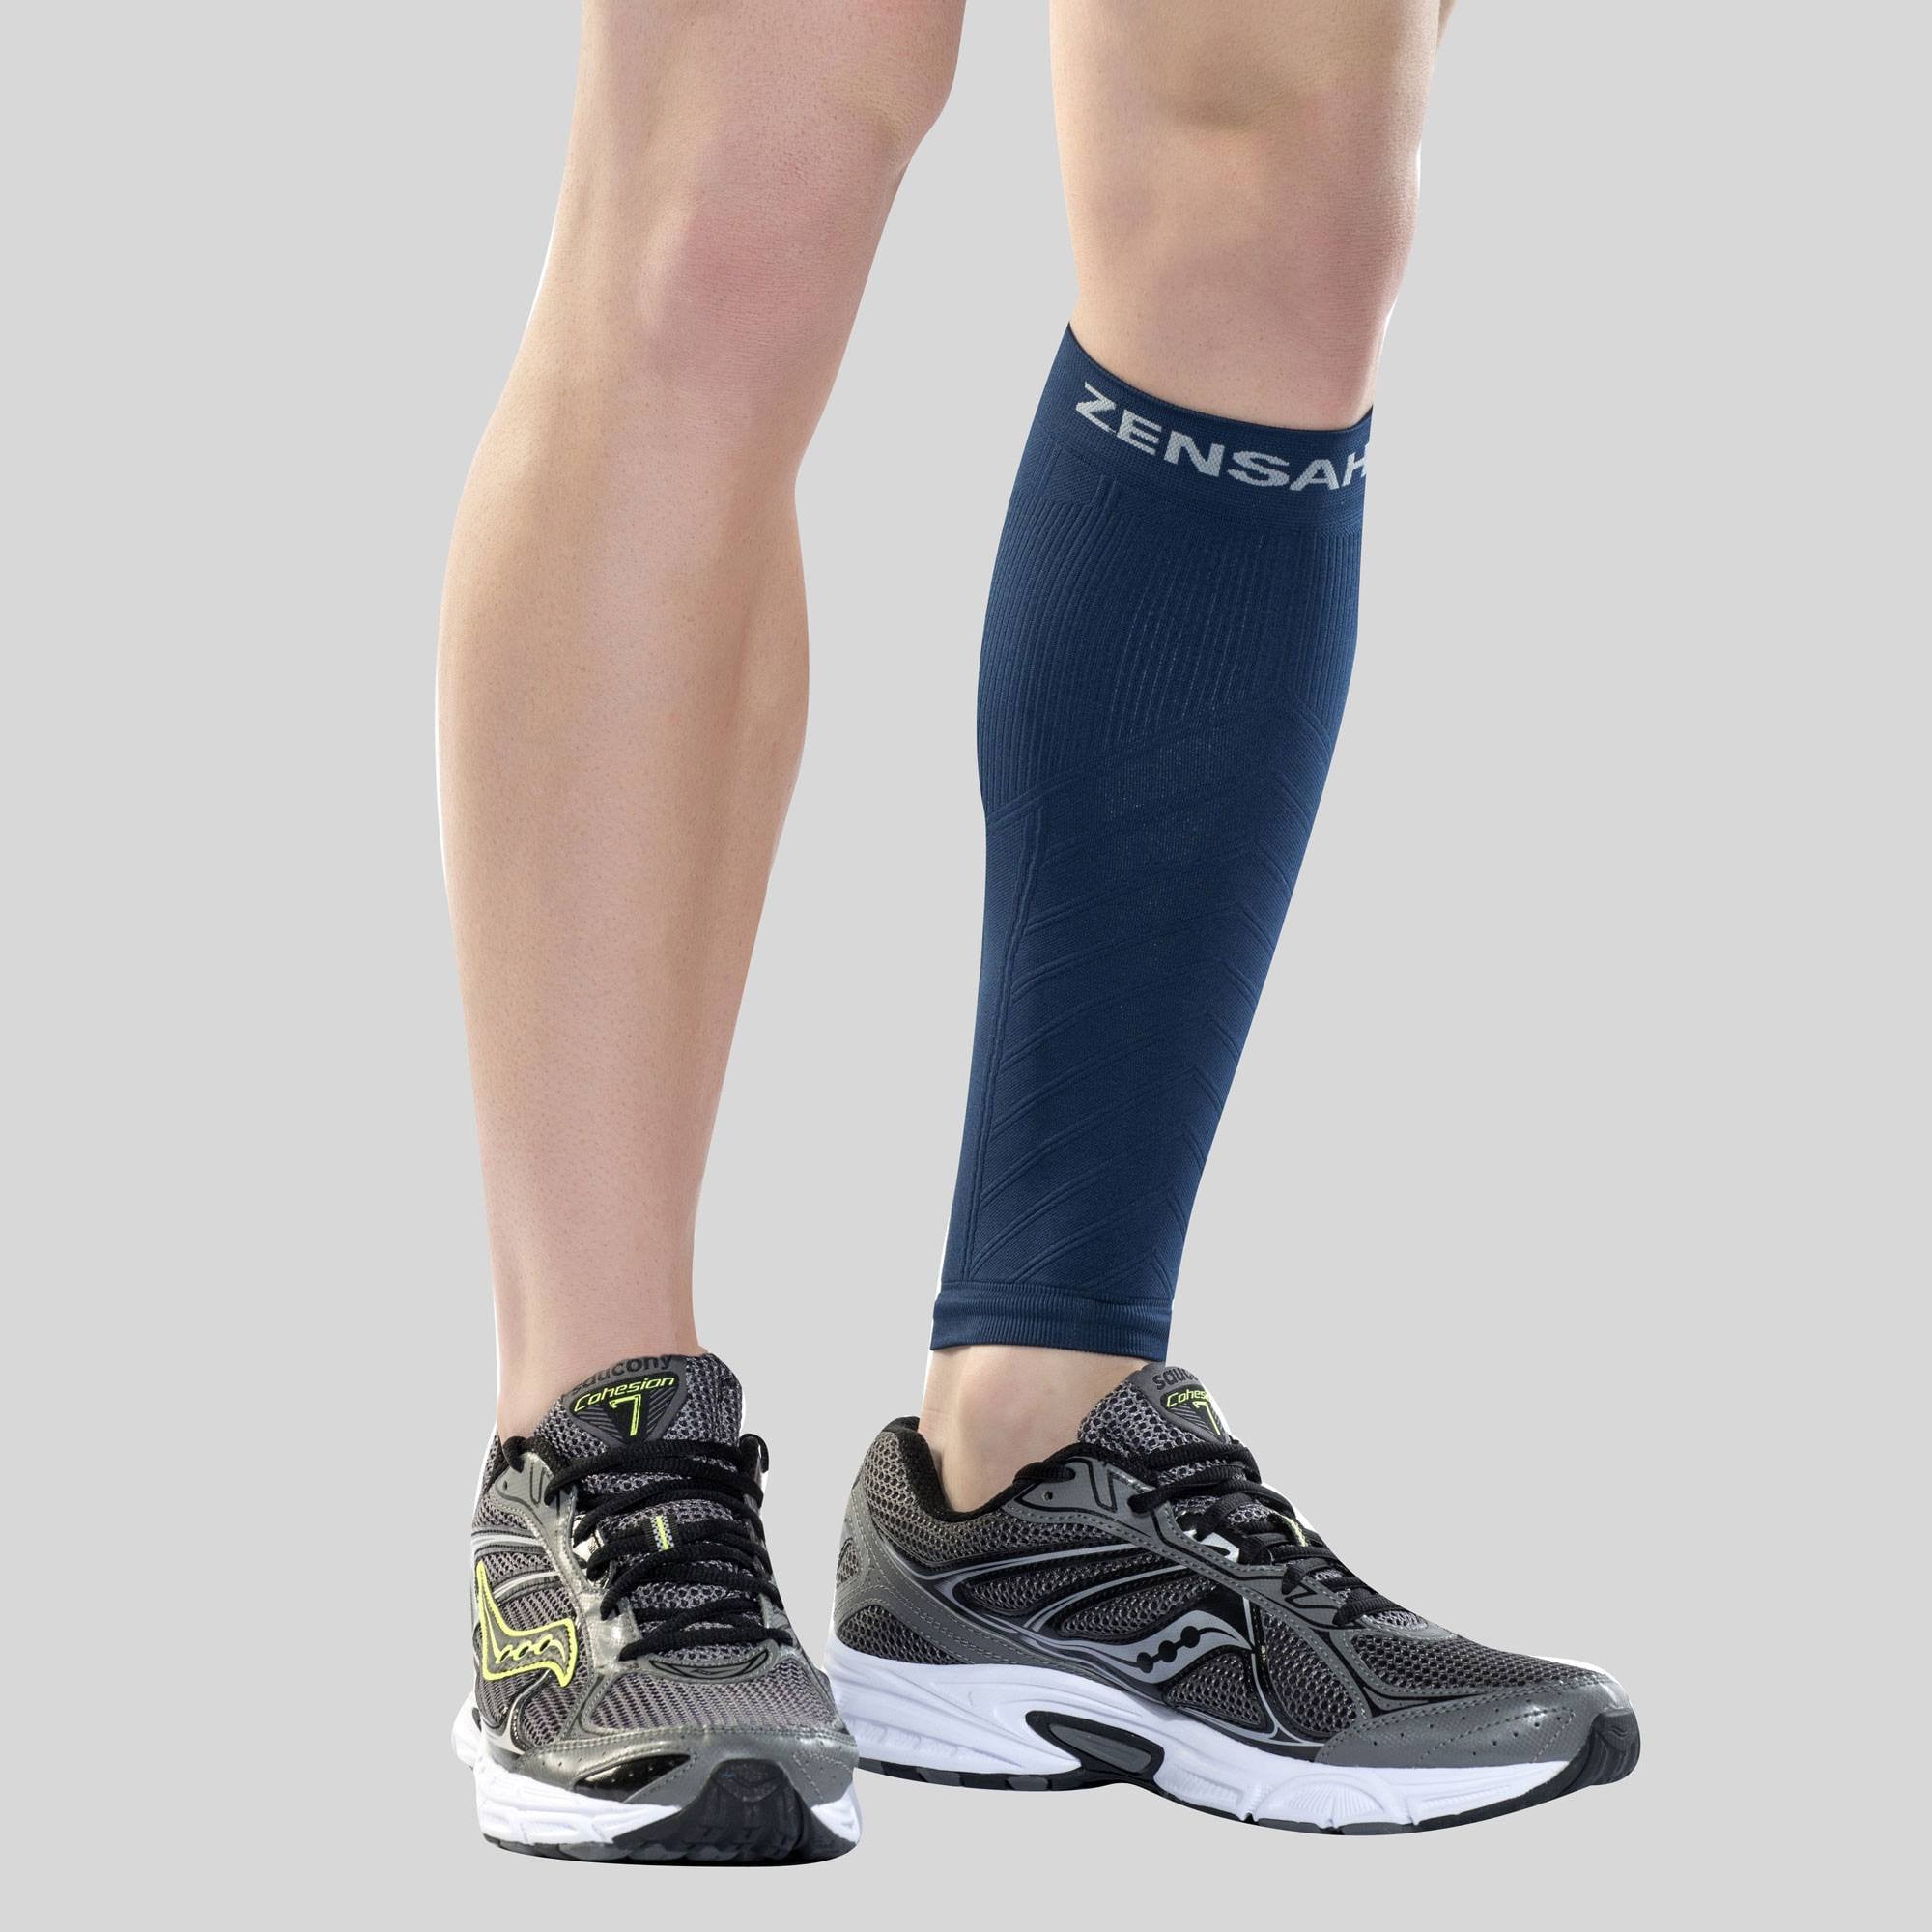 Calf Compression Sleeves, Calf Support Leg Compression Socks Leg